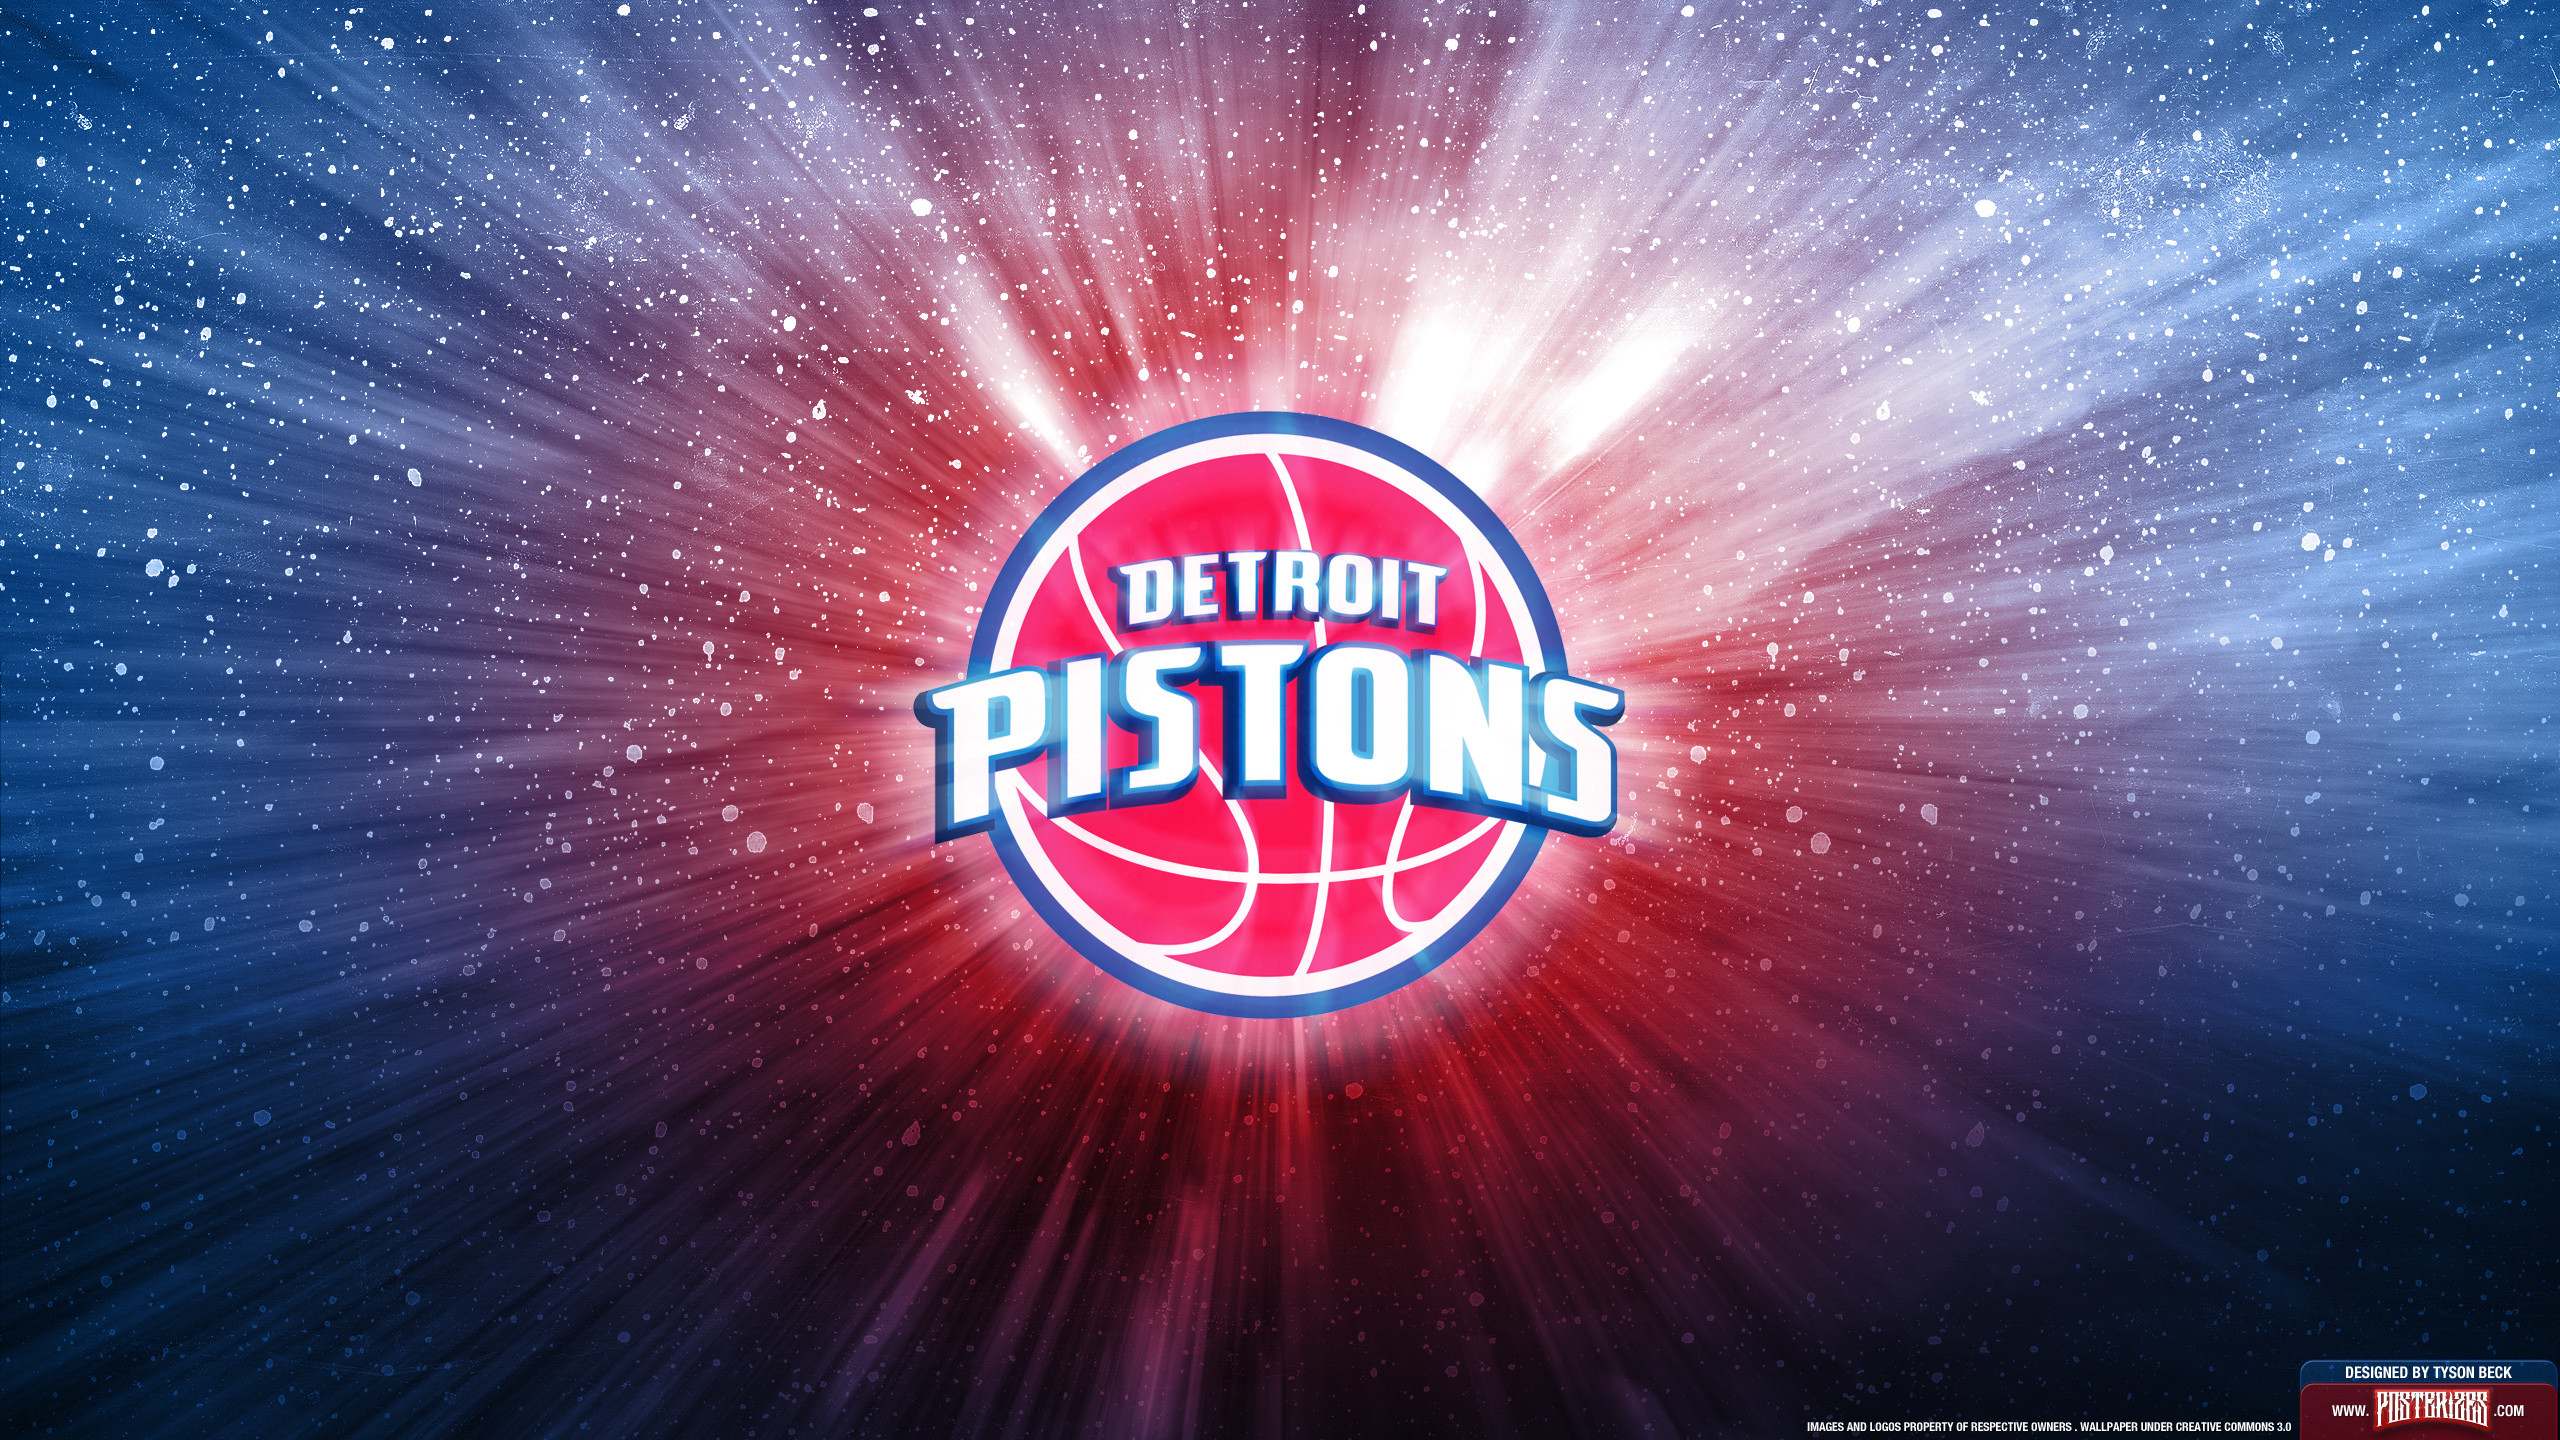 Detroit pistons. Детройт логотип НБА. Детройт Пистонс. НБА – Детройт Пистонс. Детройт Пистонс команда.